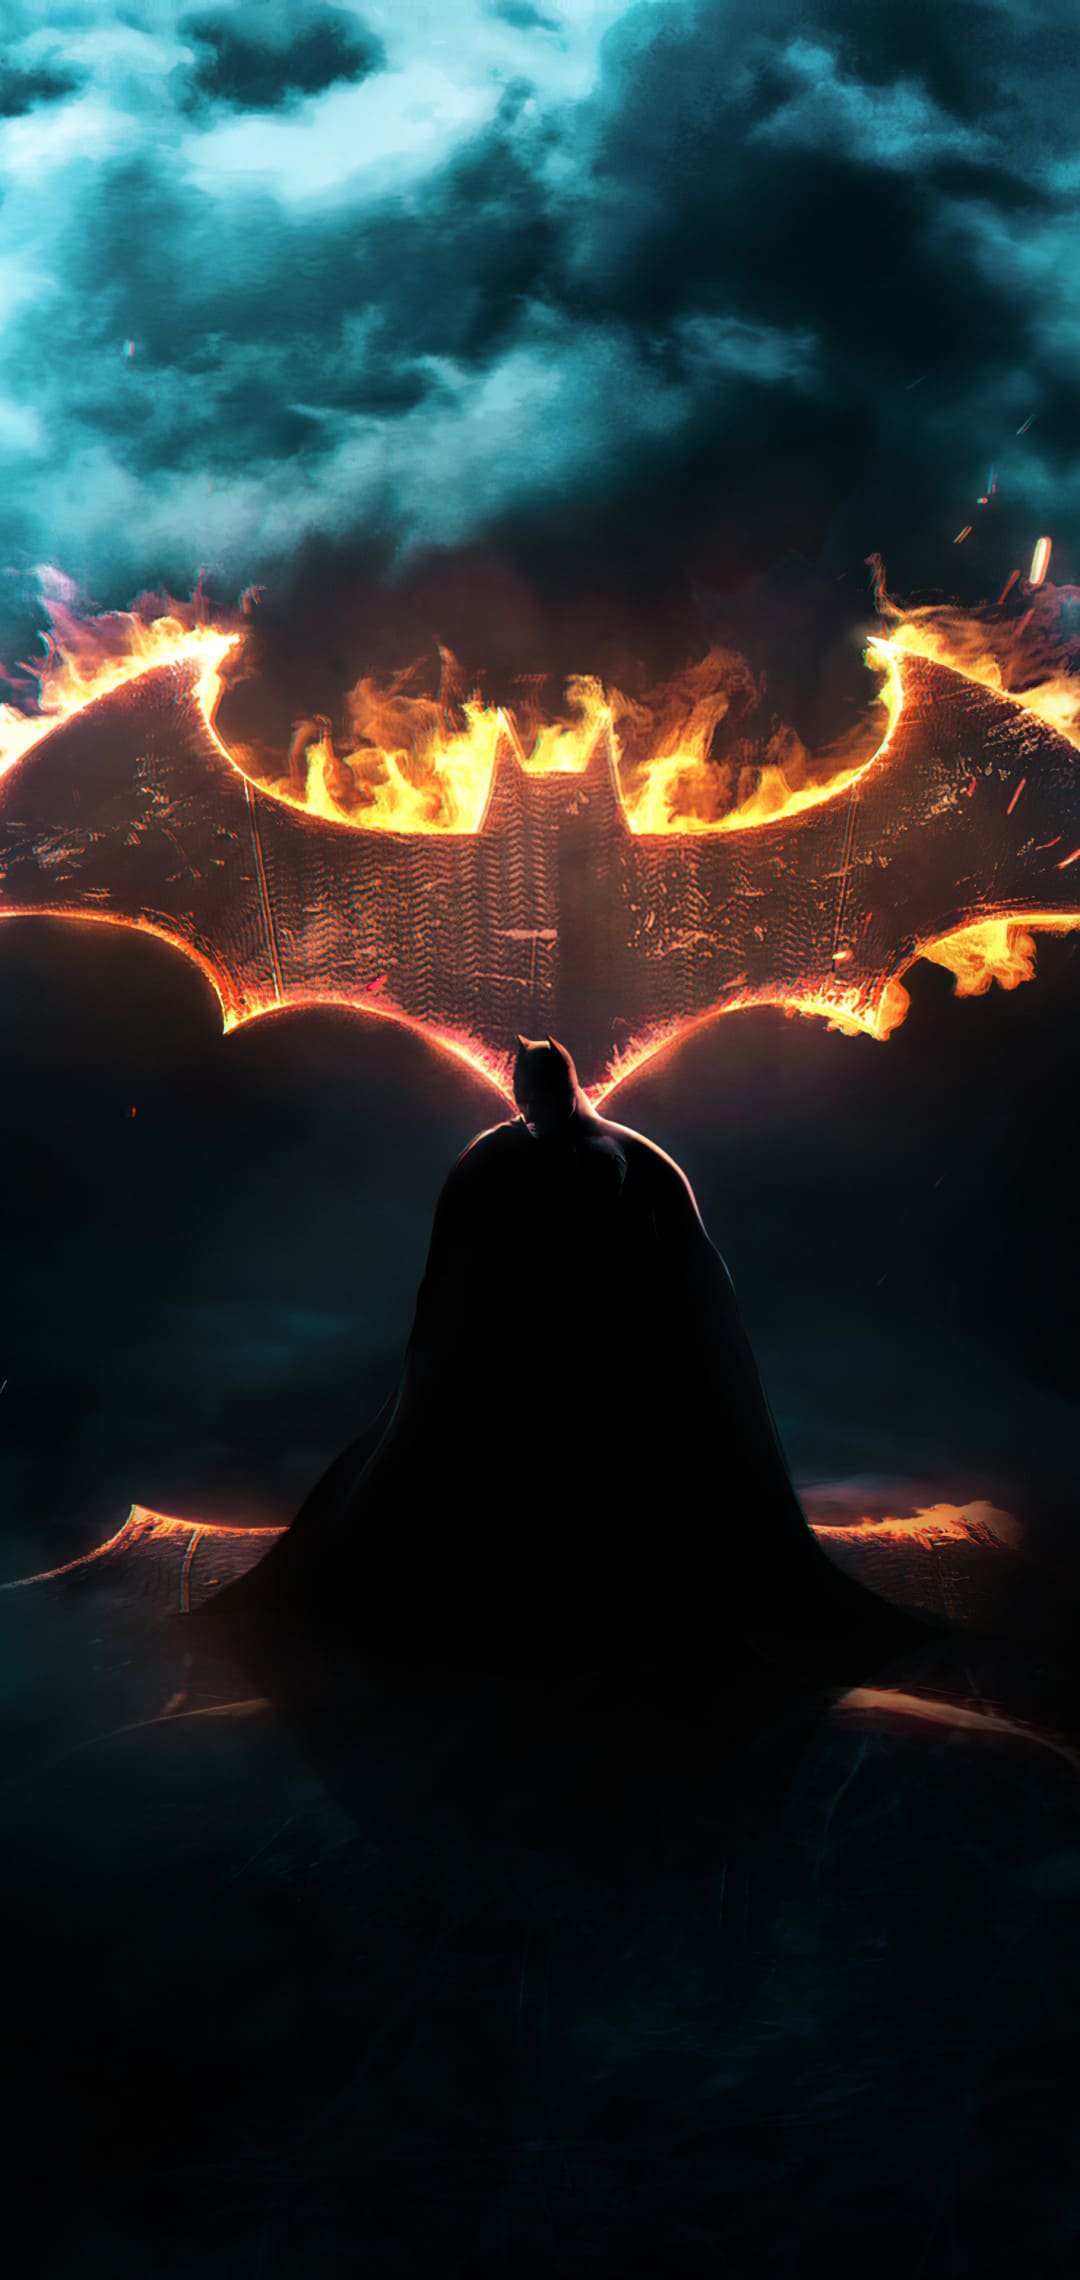 Movie The Dark Knight 4k Ultra HD Wallpaper